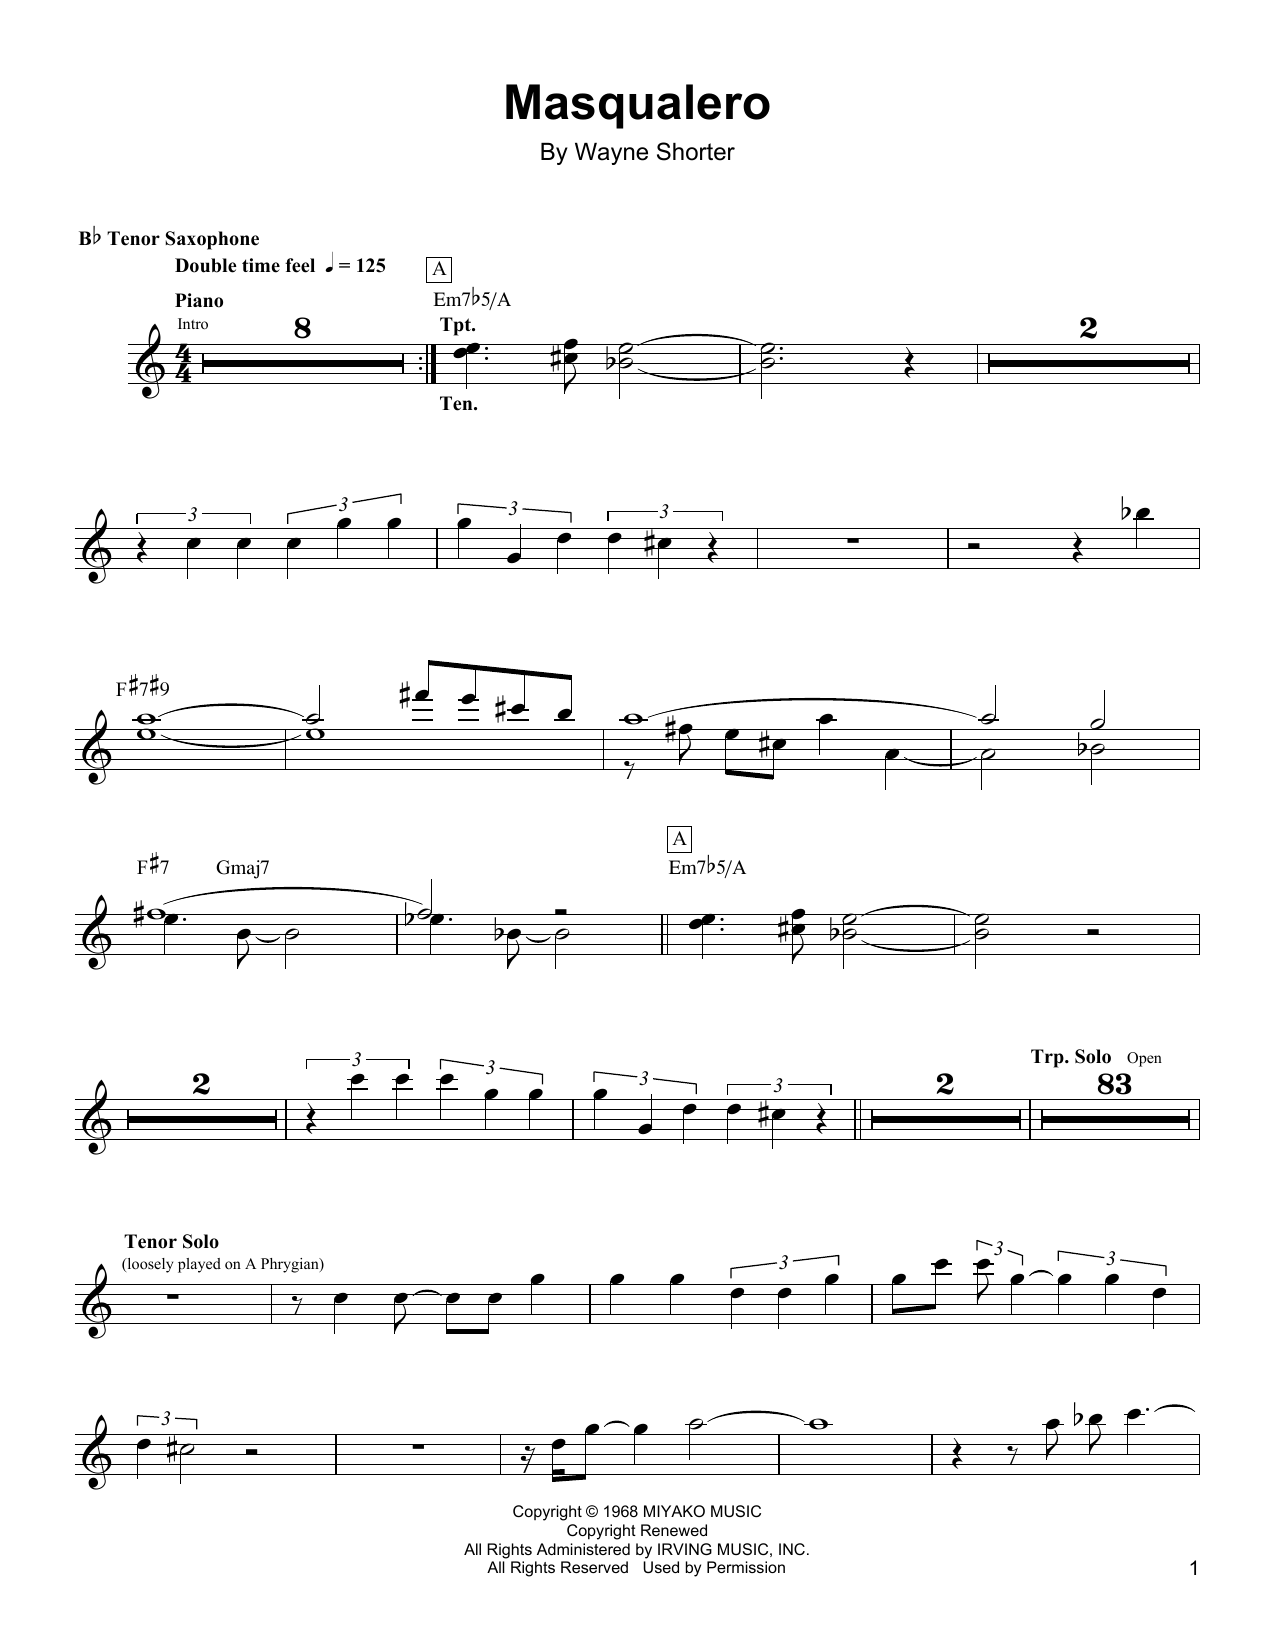 Wayne Shorter Masqualero Sheet Music Notes & Chords for Tenor Sax Transcription - Download or Print PDF